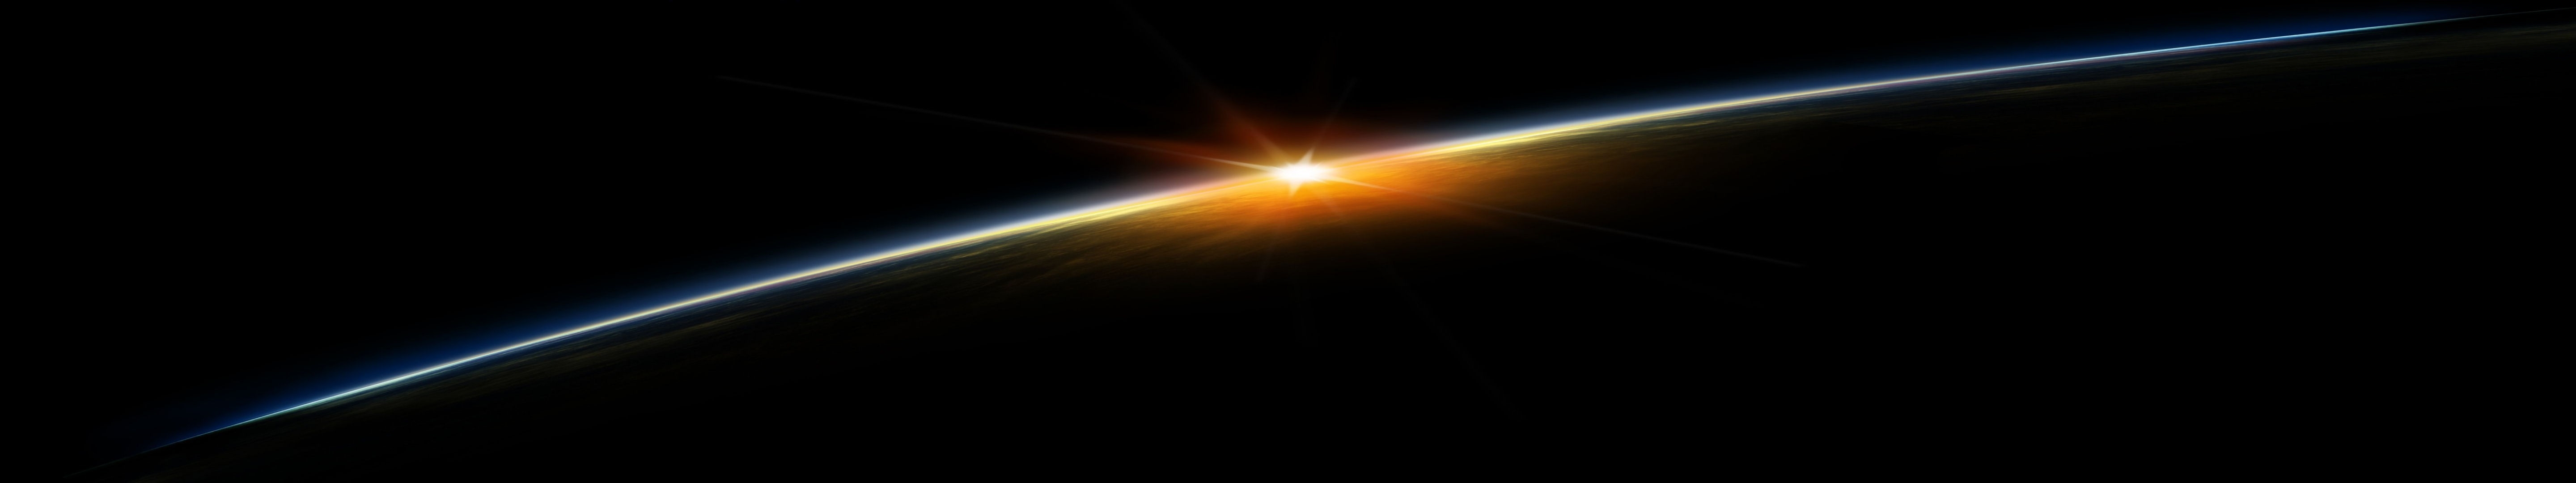 Бесплатное фото Космический восход солнца на планете Земля